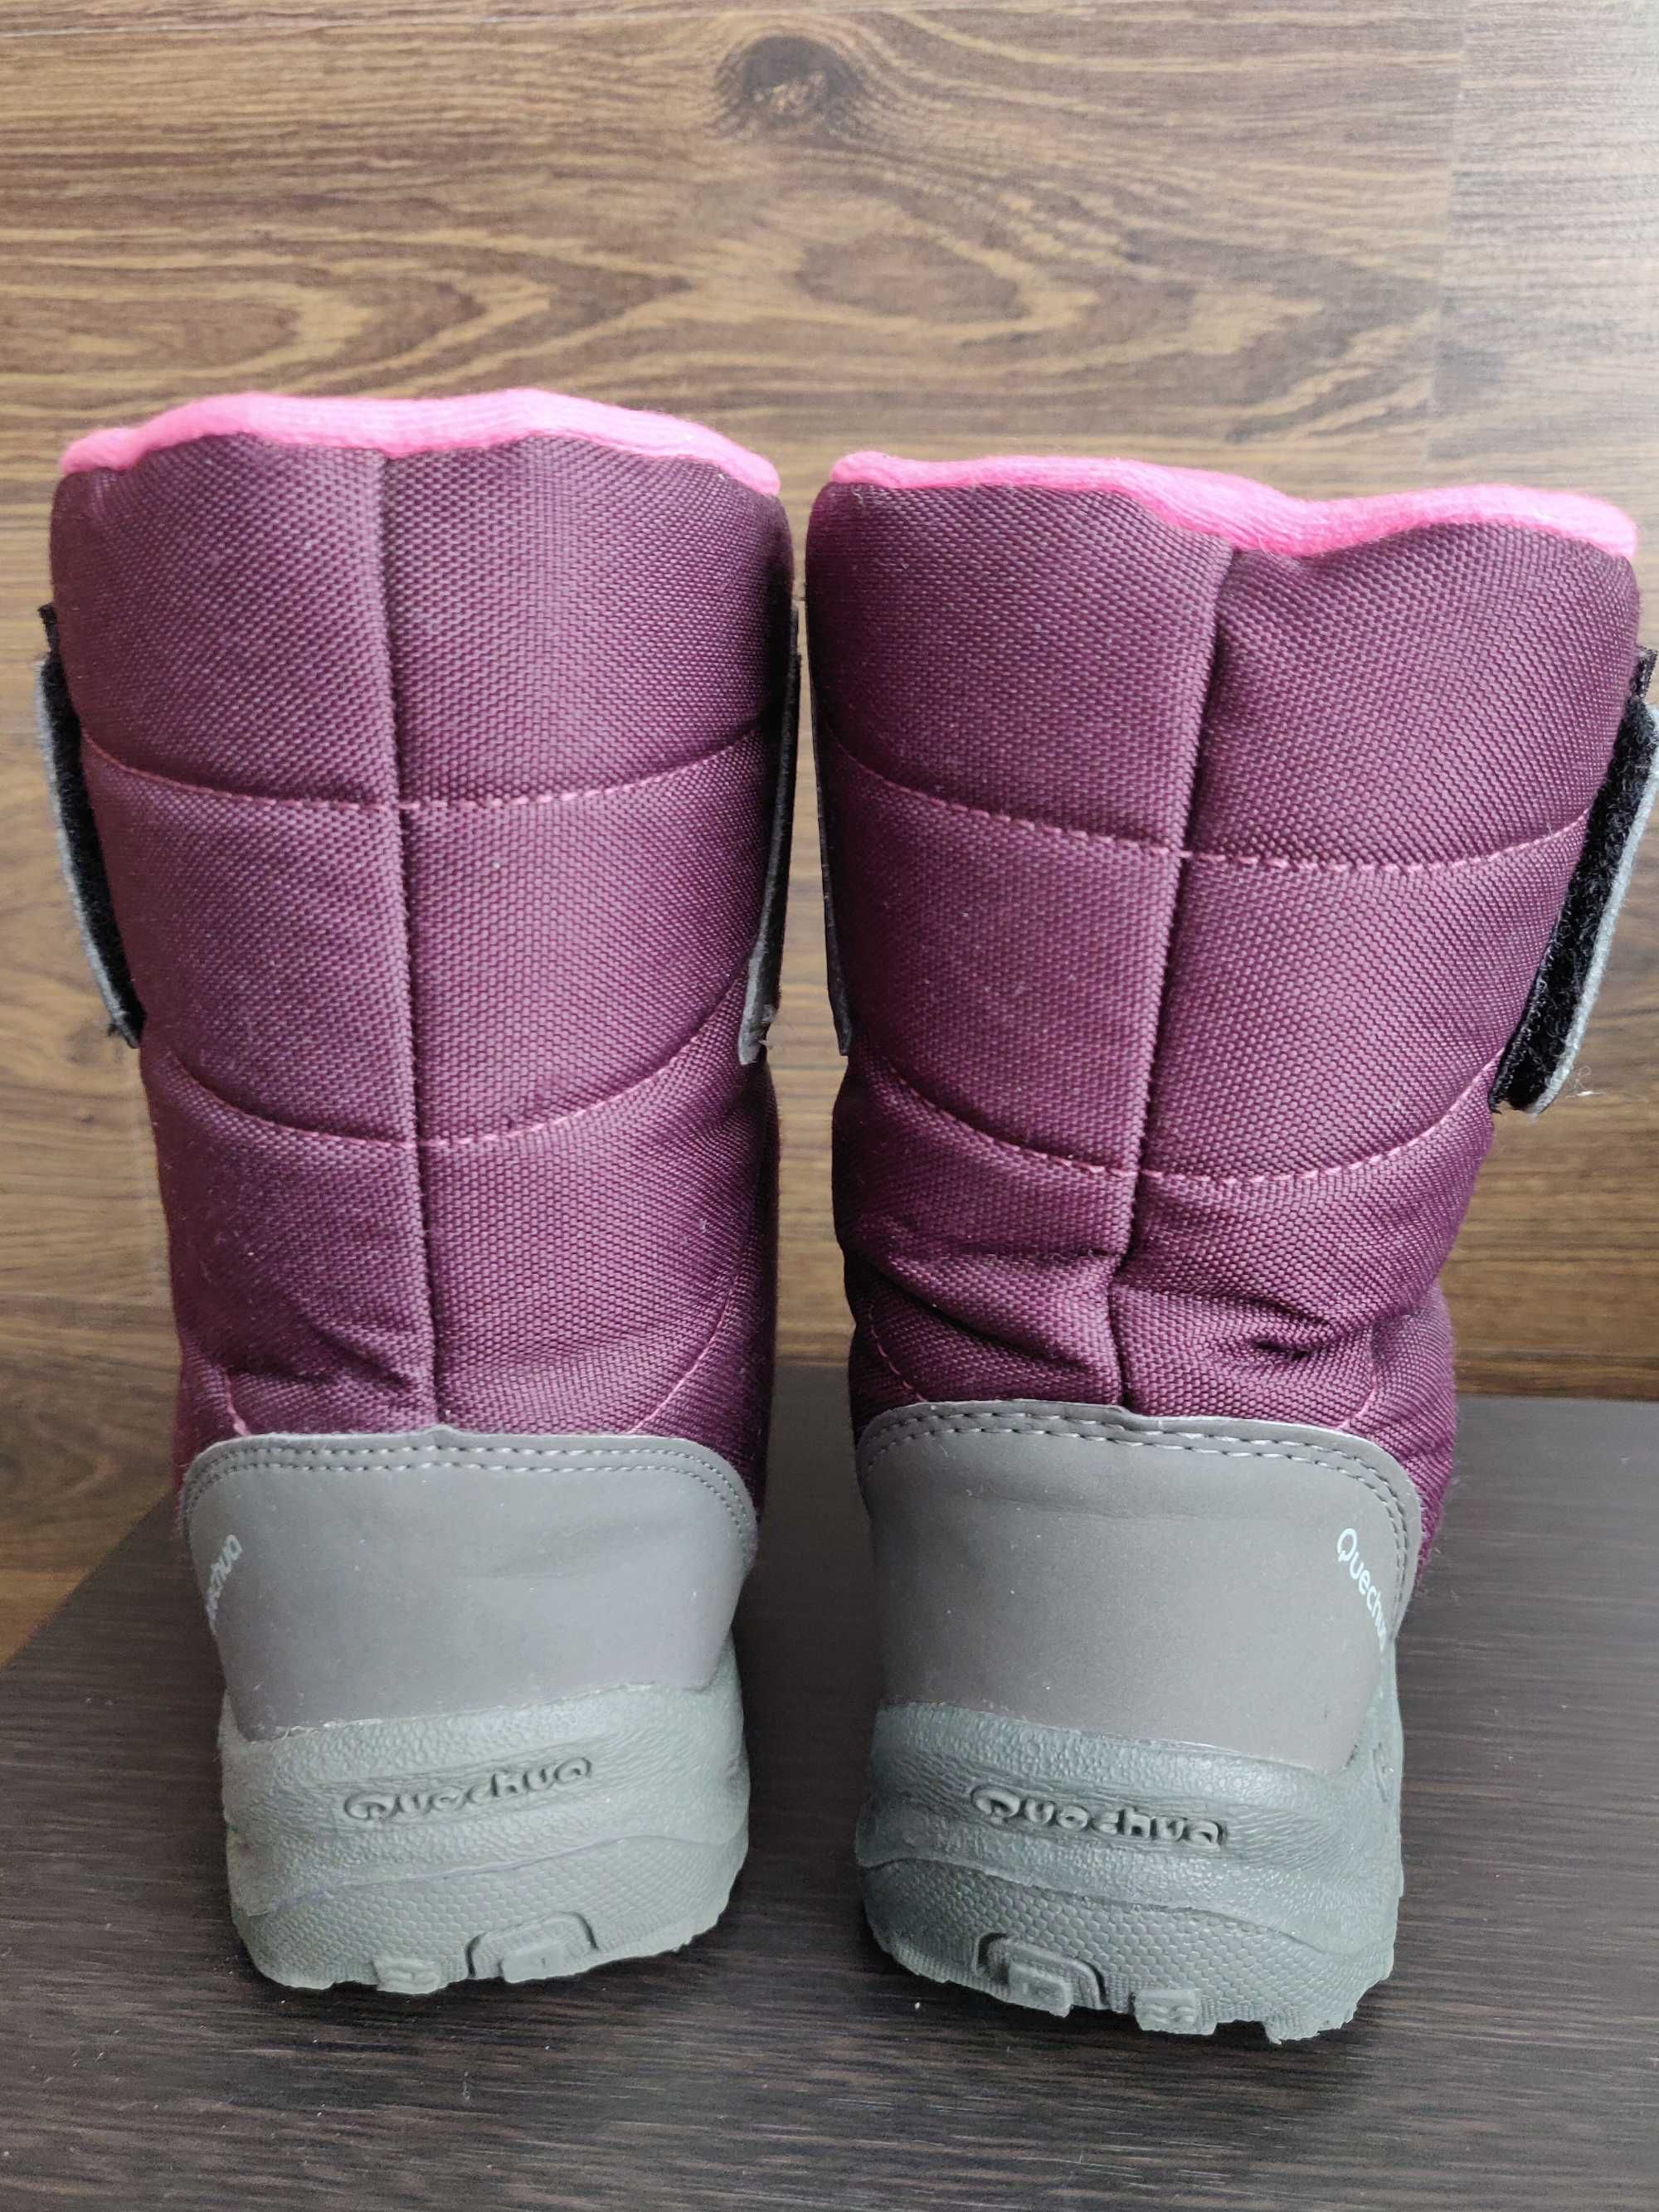 Сапоги /ботинки Decathlon Quechua waterproof р. 34 / 21,5 см.,марсала